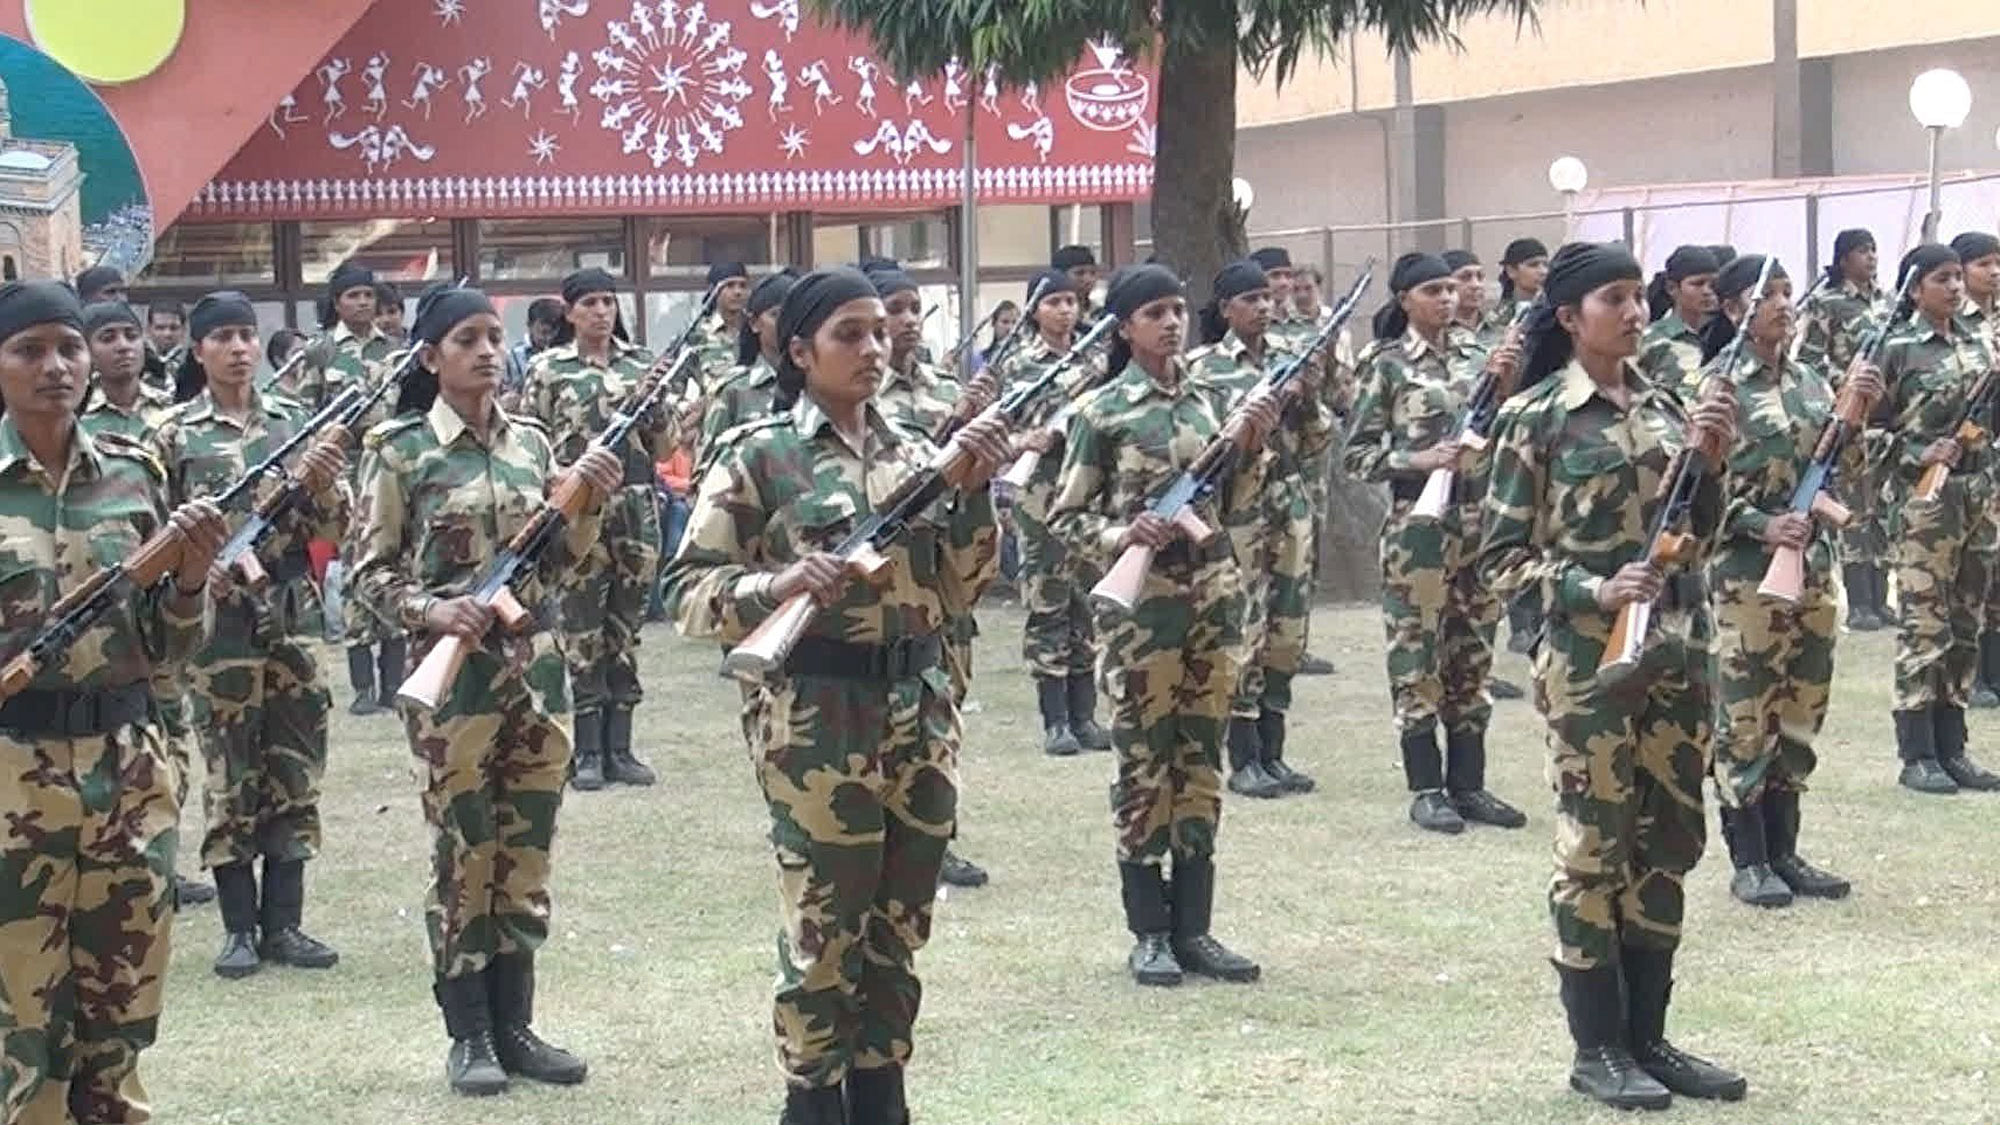 (Photo Courtesy: <a href="http://defencetalk.net/threads/anti-naxal-ops-first-women-commandos-team-deployed-in-jungles.3437/">defencetalk.net</a>)